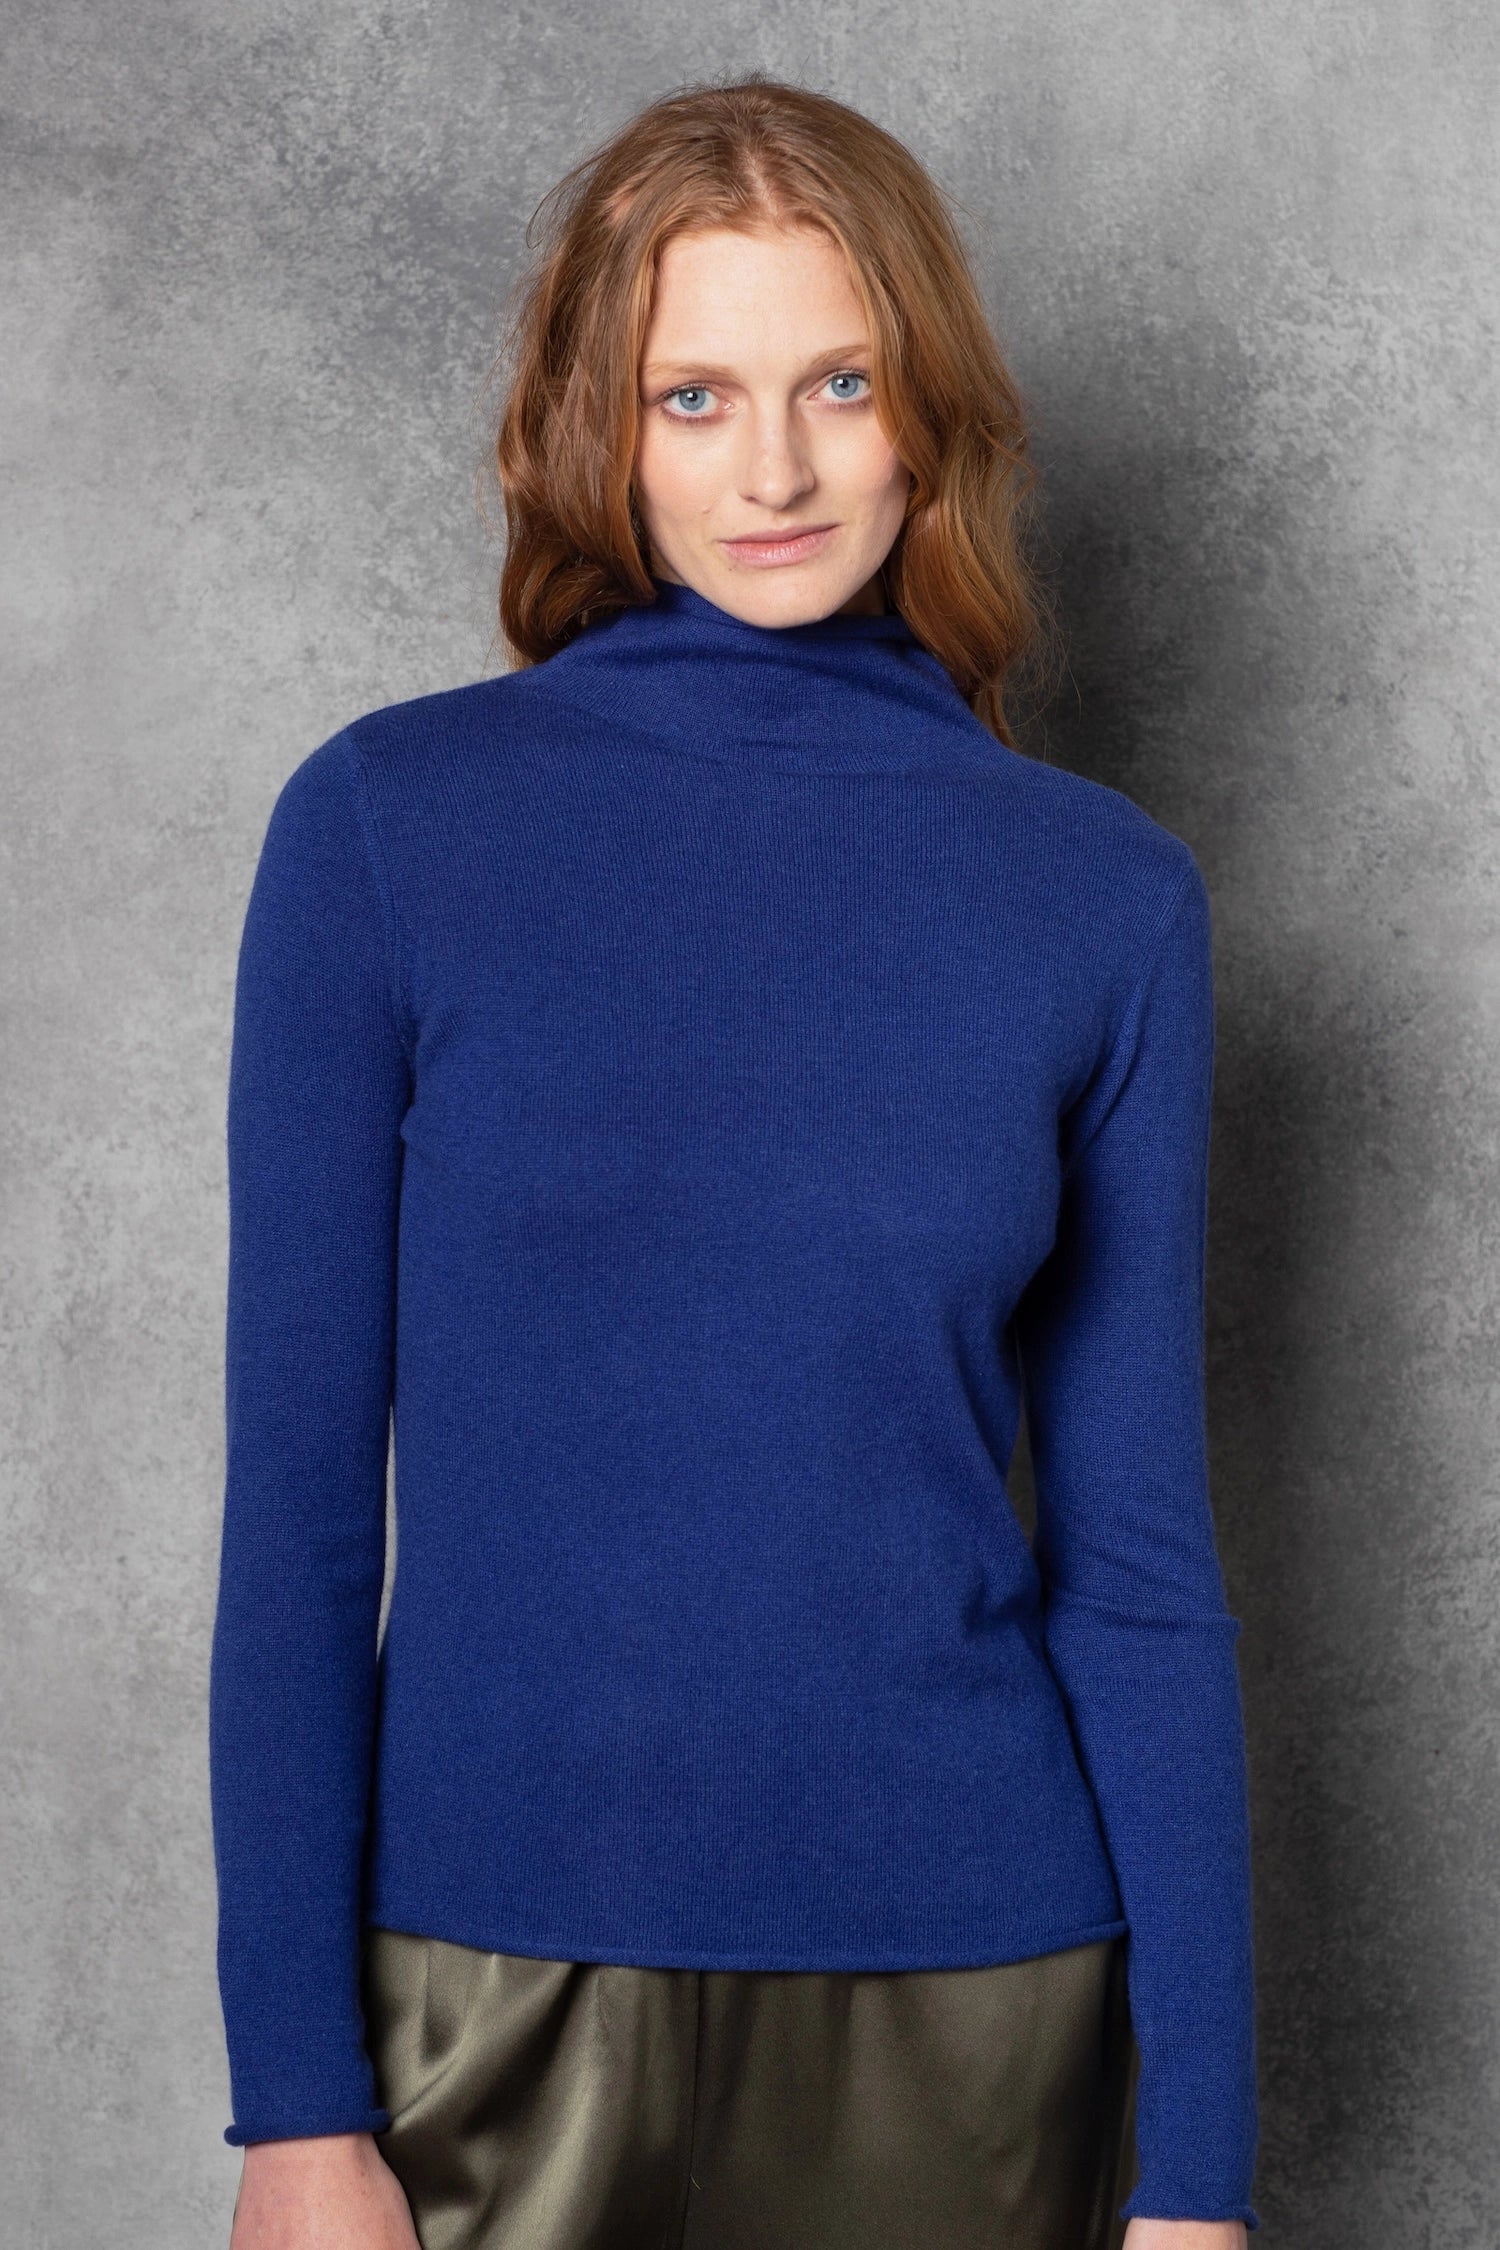 luxury cashmere turtleneck sweater in bright blue